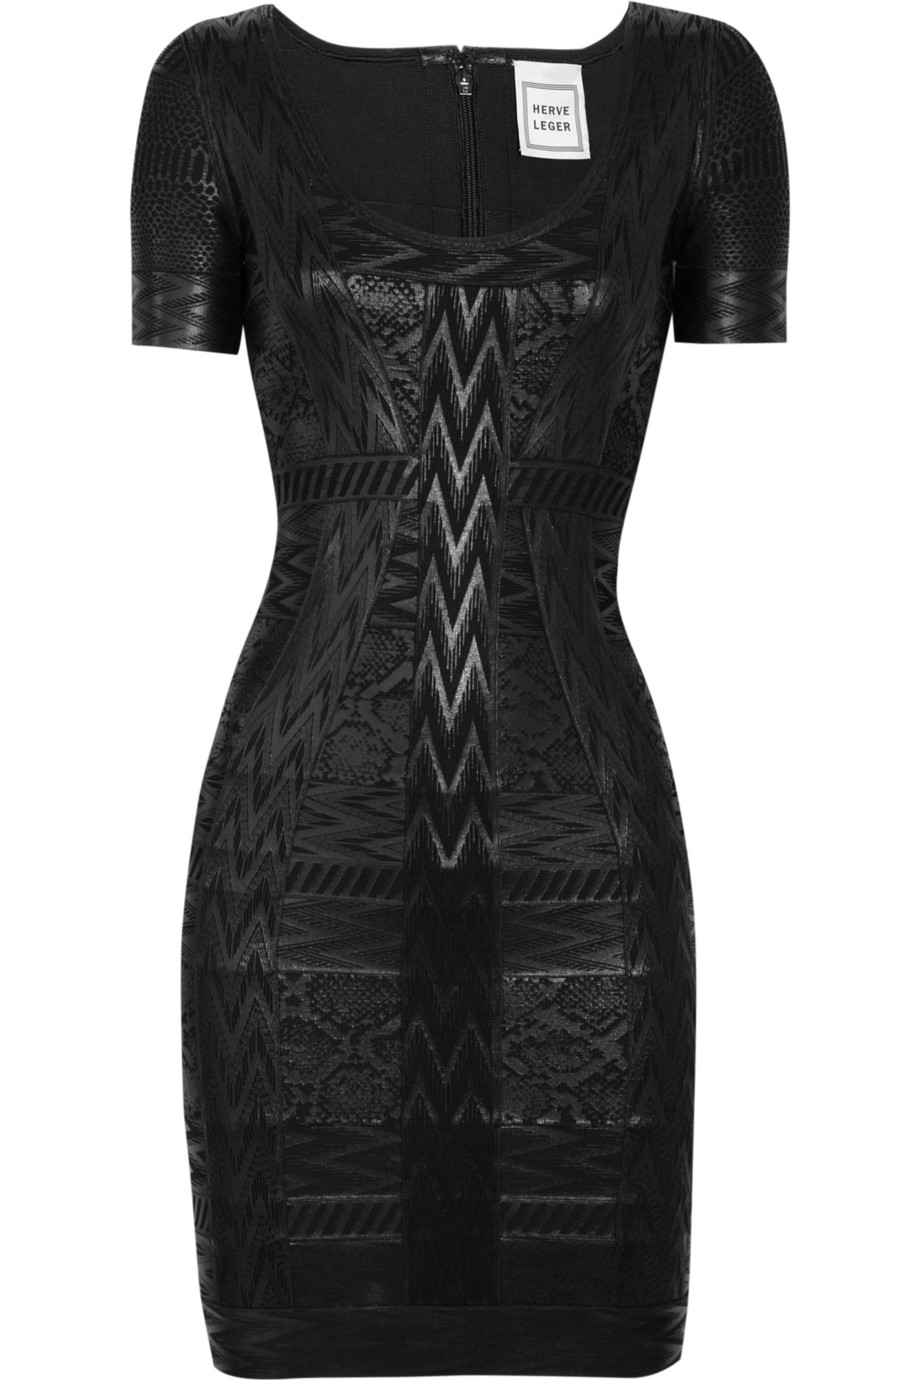 Lyst - Hervé léger Printed Bandage Dress in Black